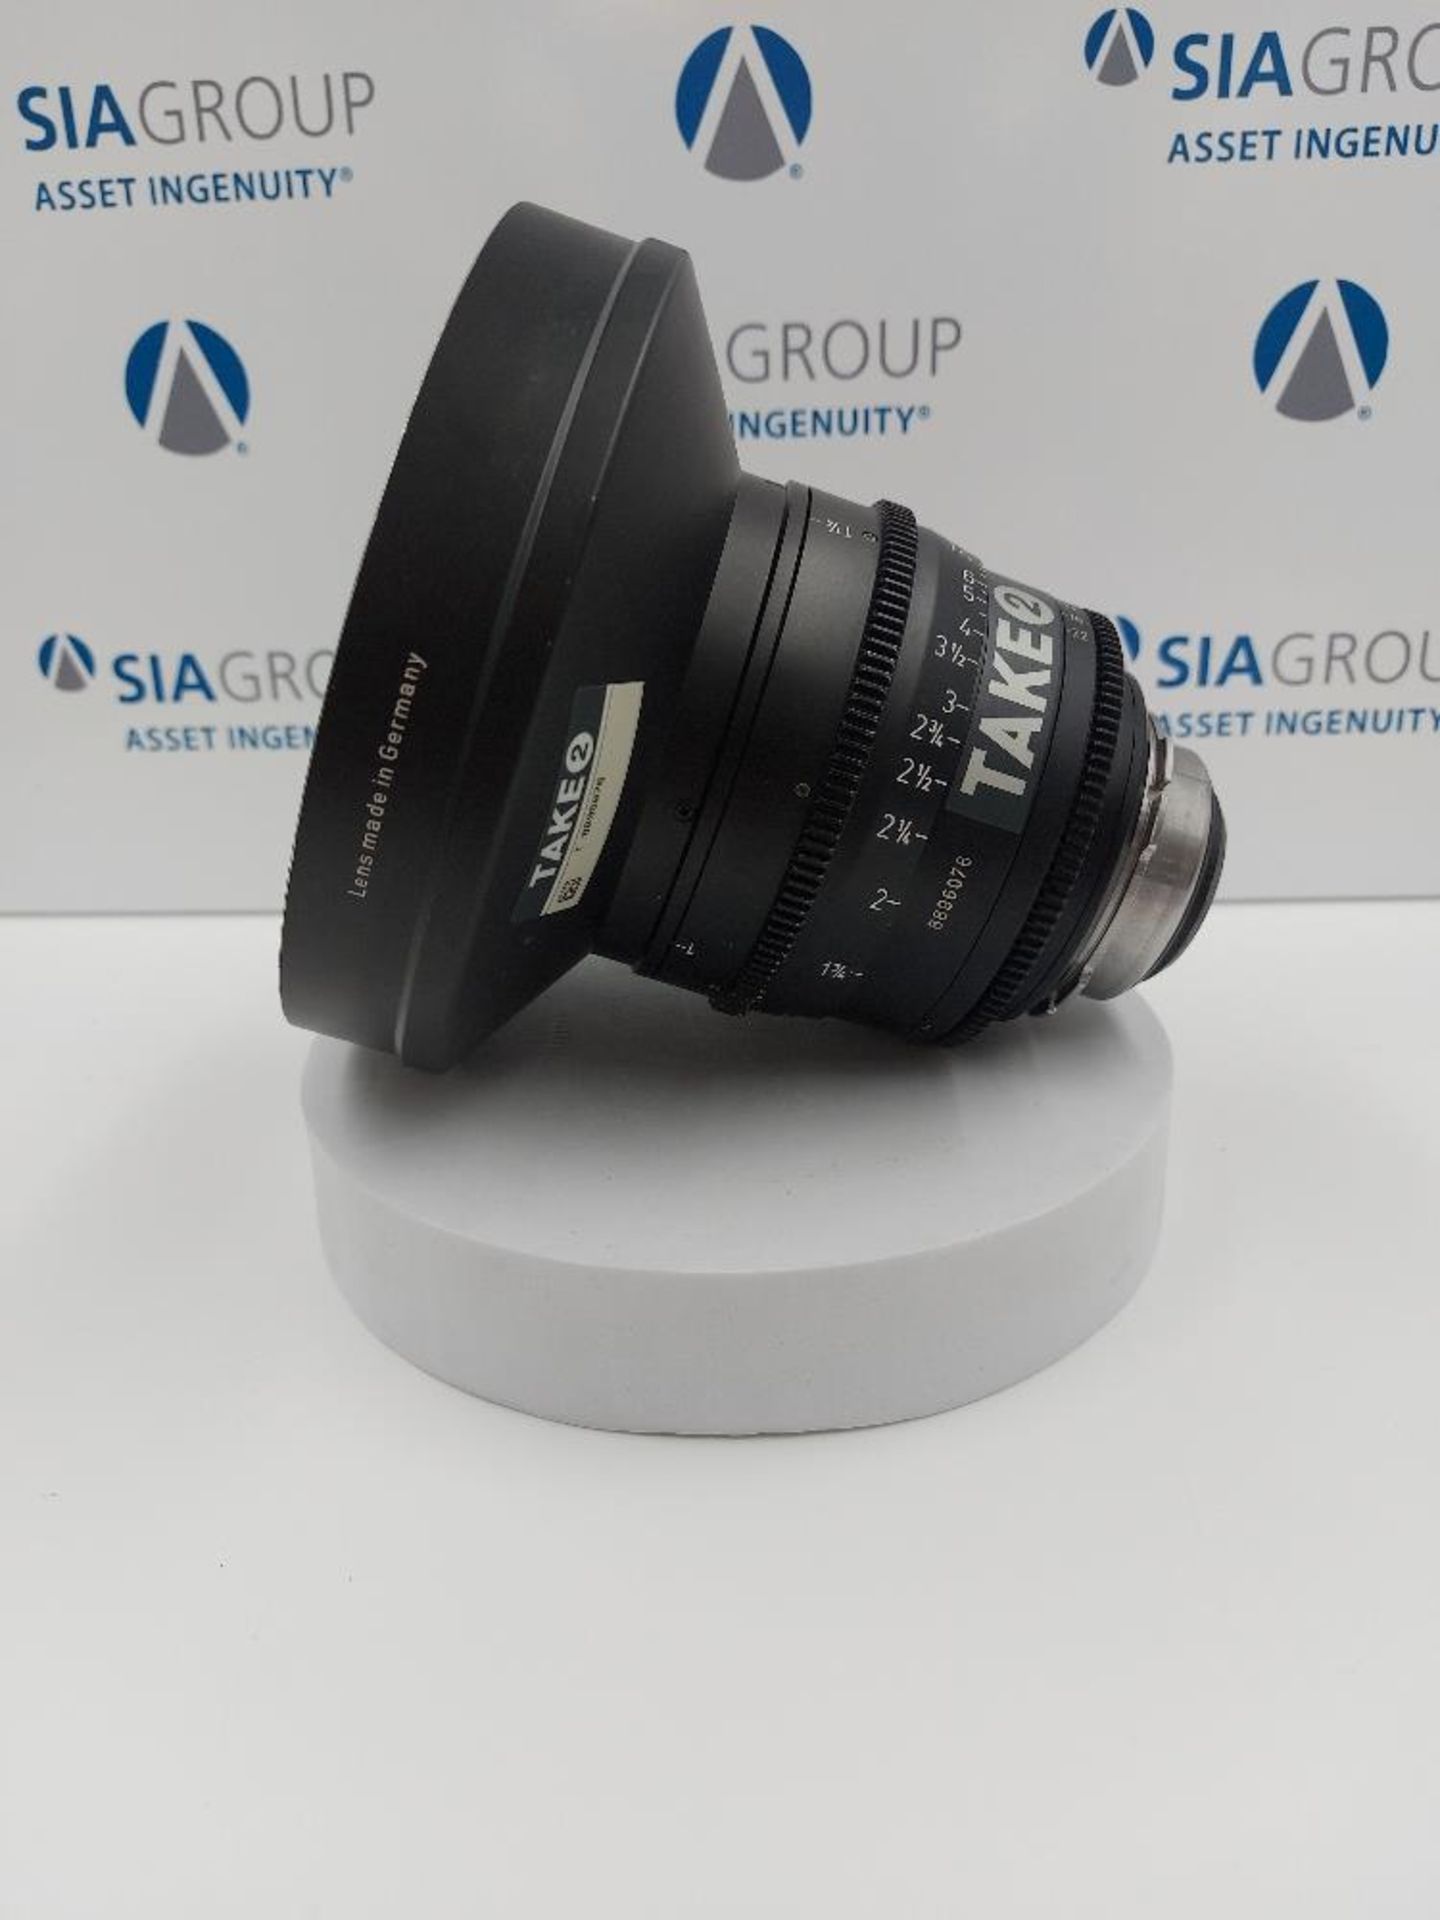 ARRI 12mm T2 S35 Ultra Prime PL Mount Lens Kit - Image 4 of 9